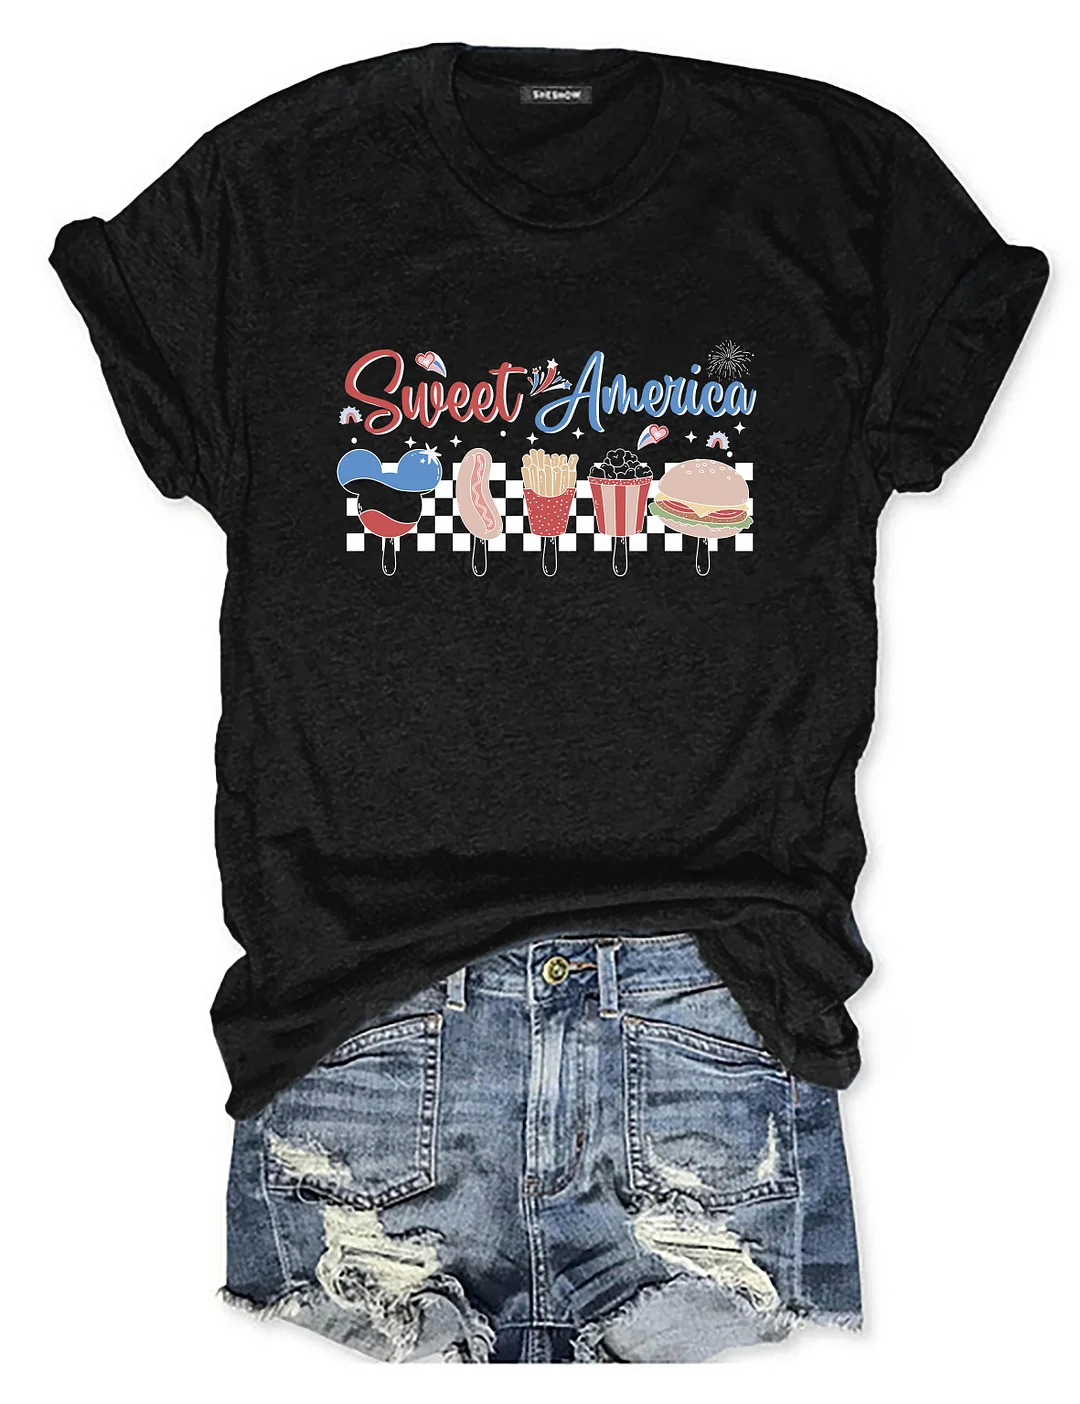 Sweet America T-Shirt